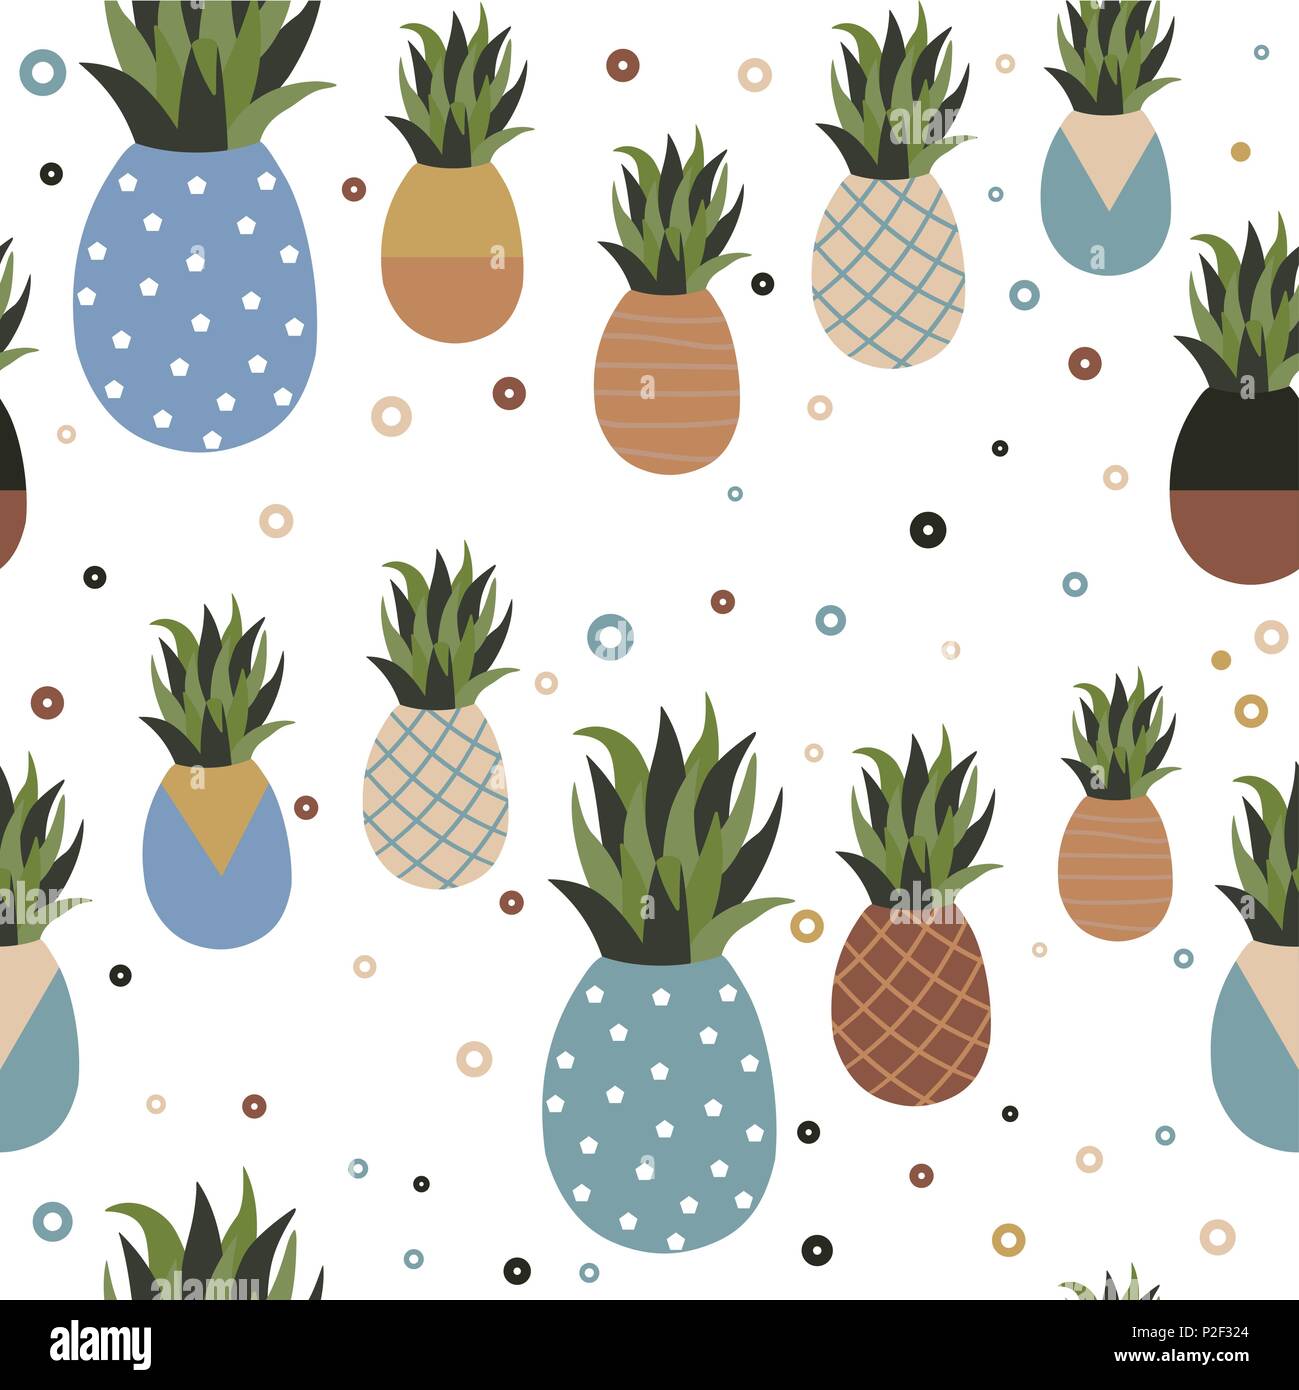 Pineapple seamless pattern illustration, vintage style fruit background. Retro geometric shape decoration for summer. EPS10 vector. Stock Vector